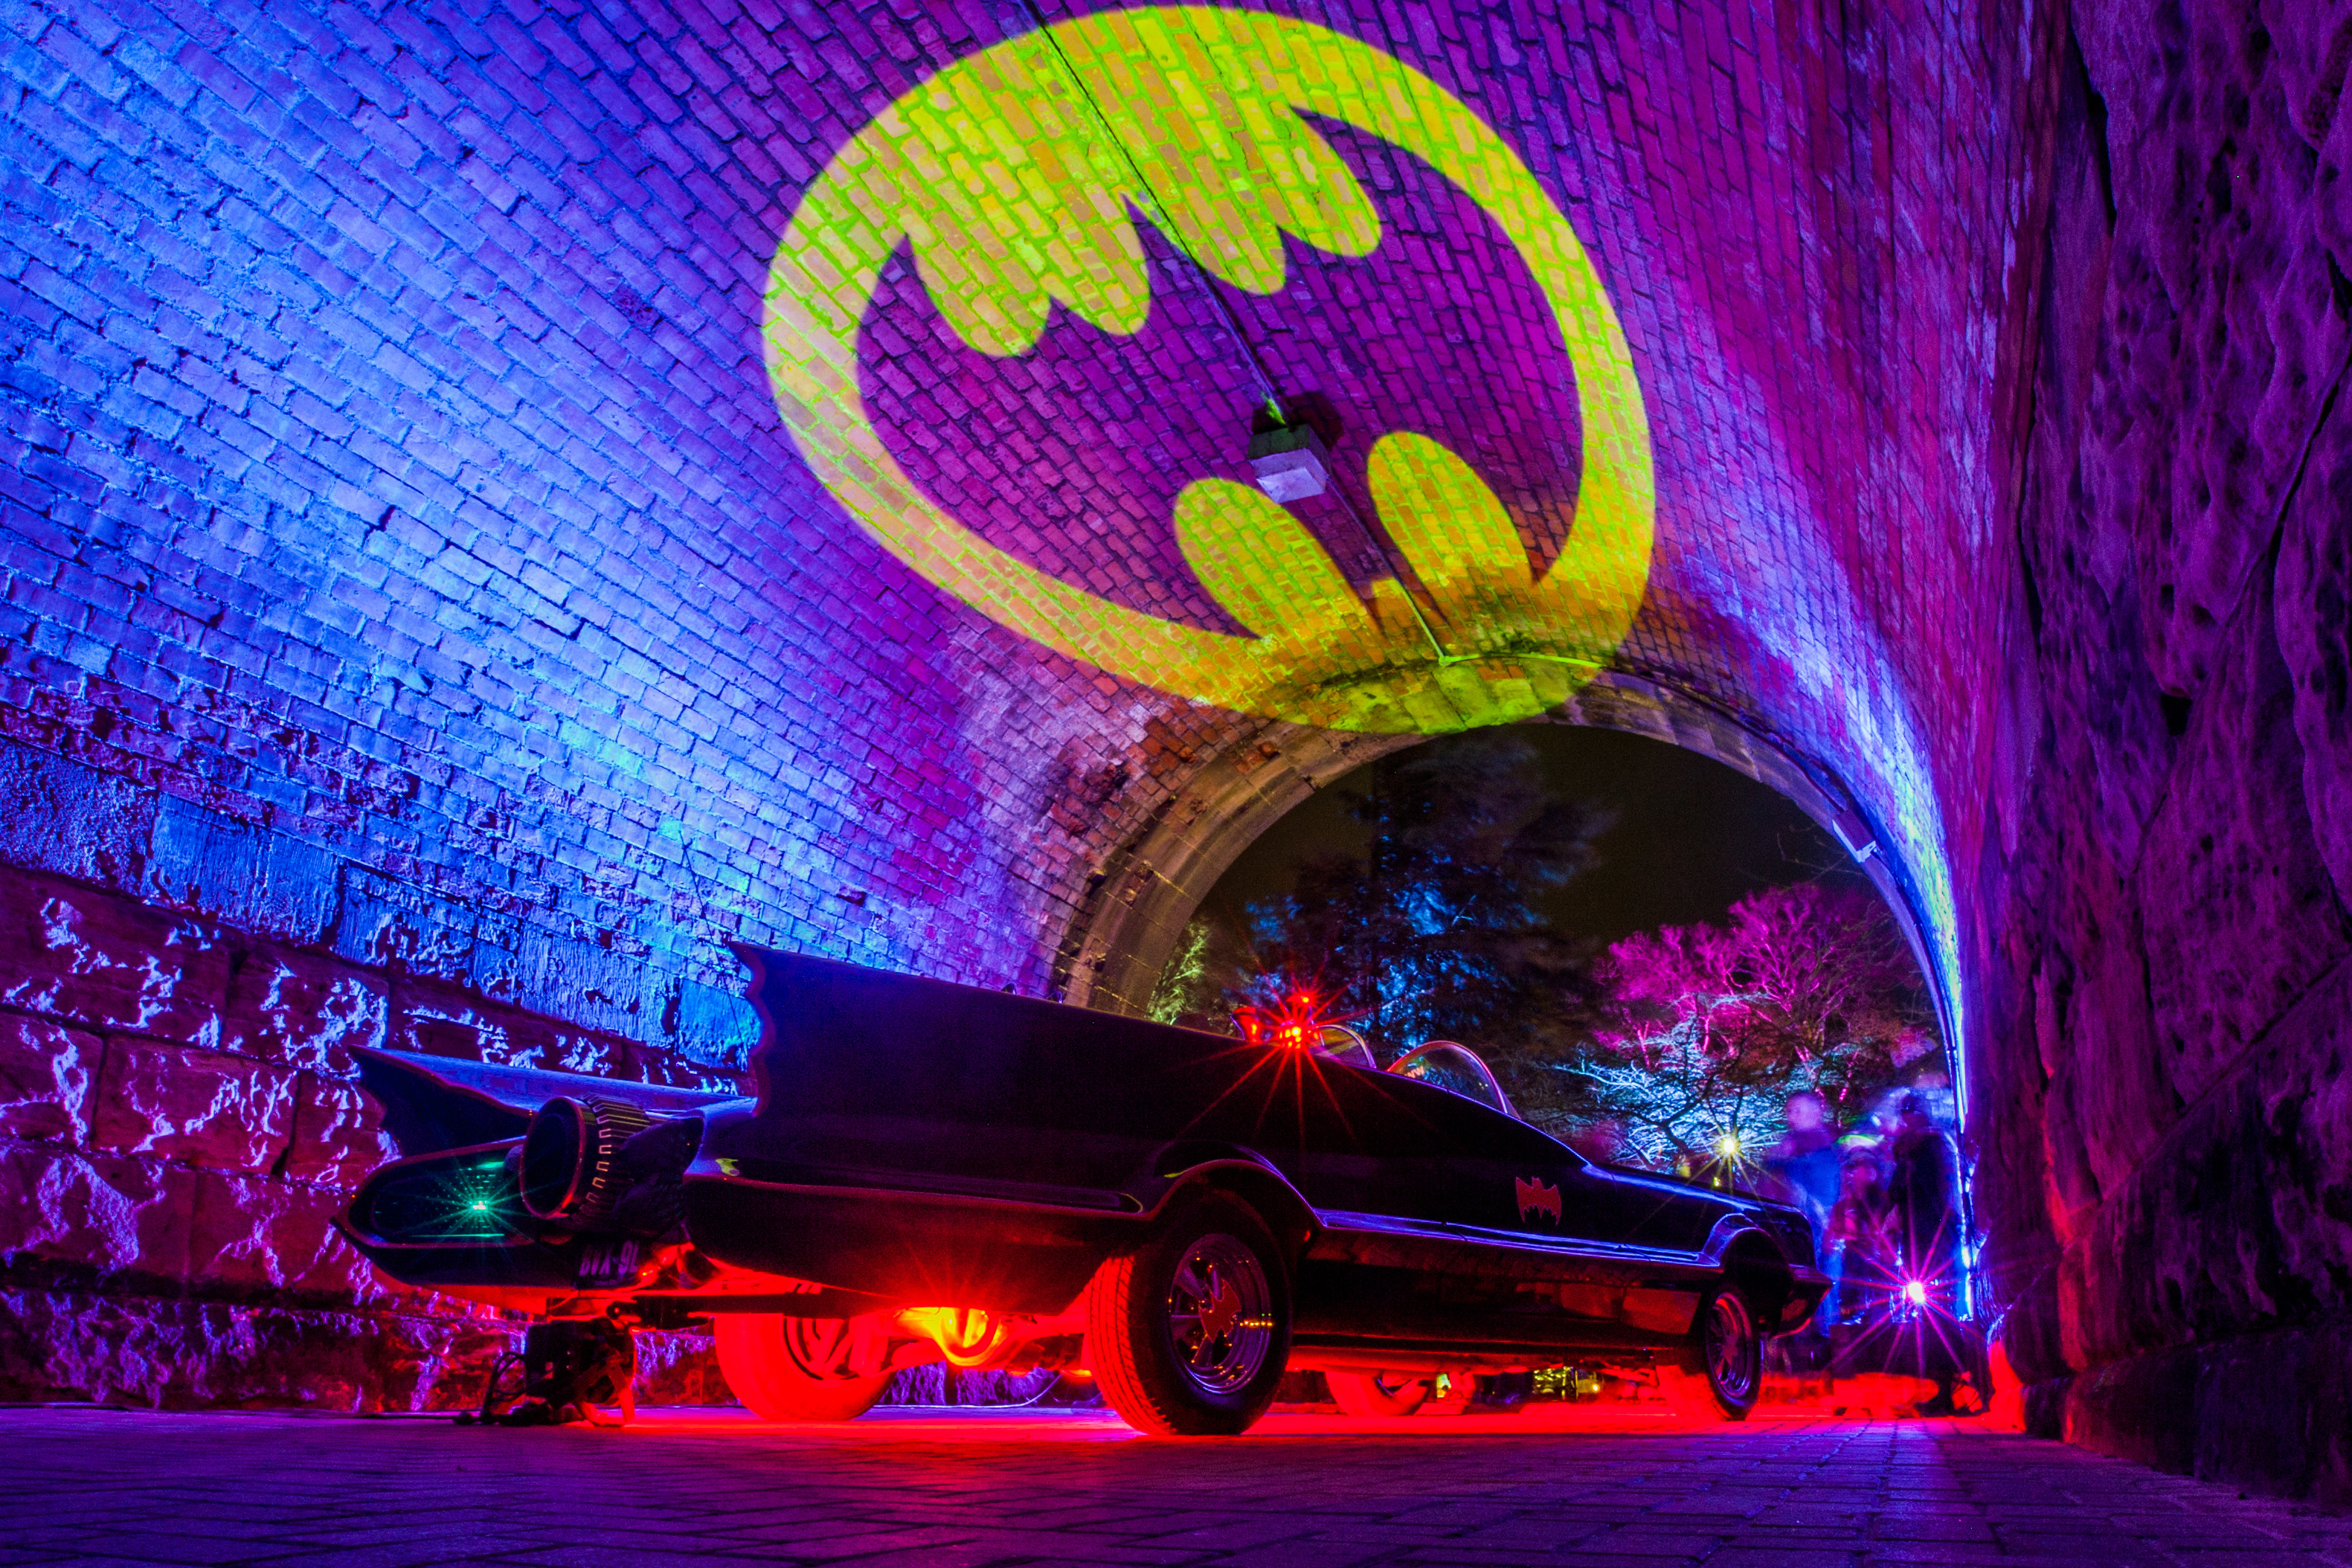 The Batmobile was among the highlights during the Superhero nights.